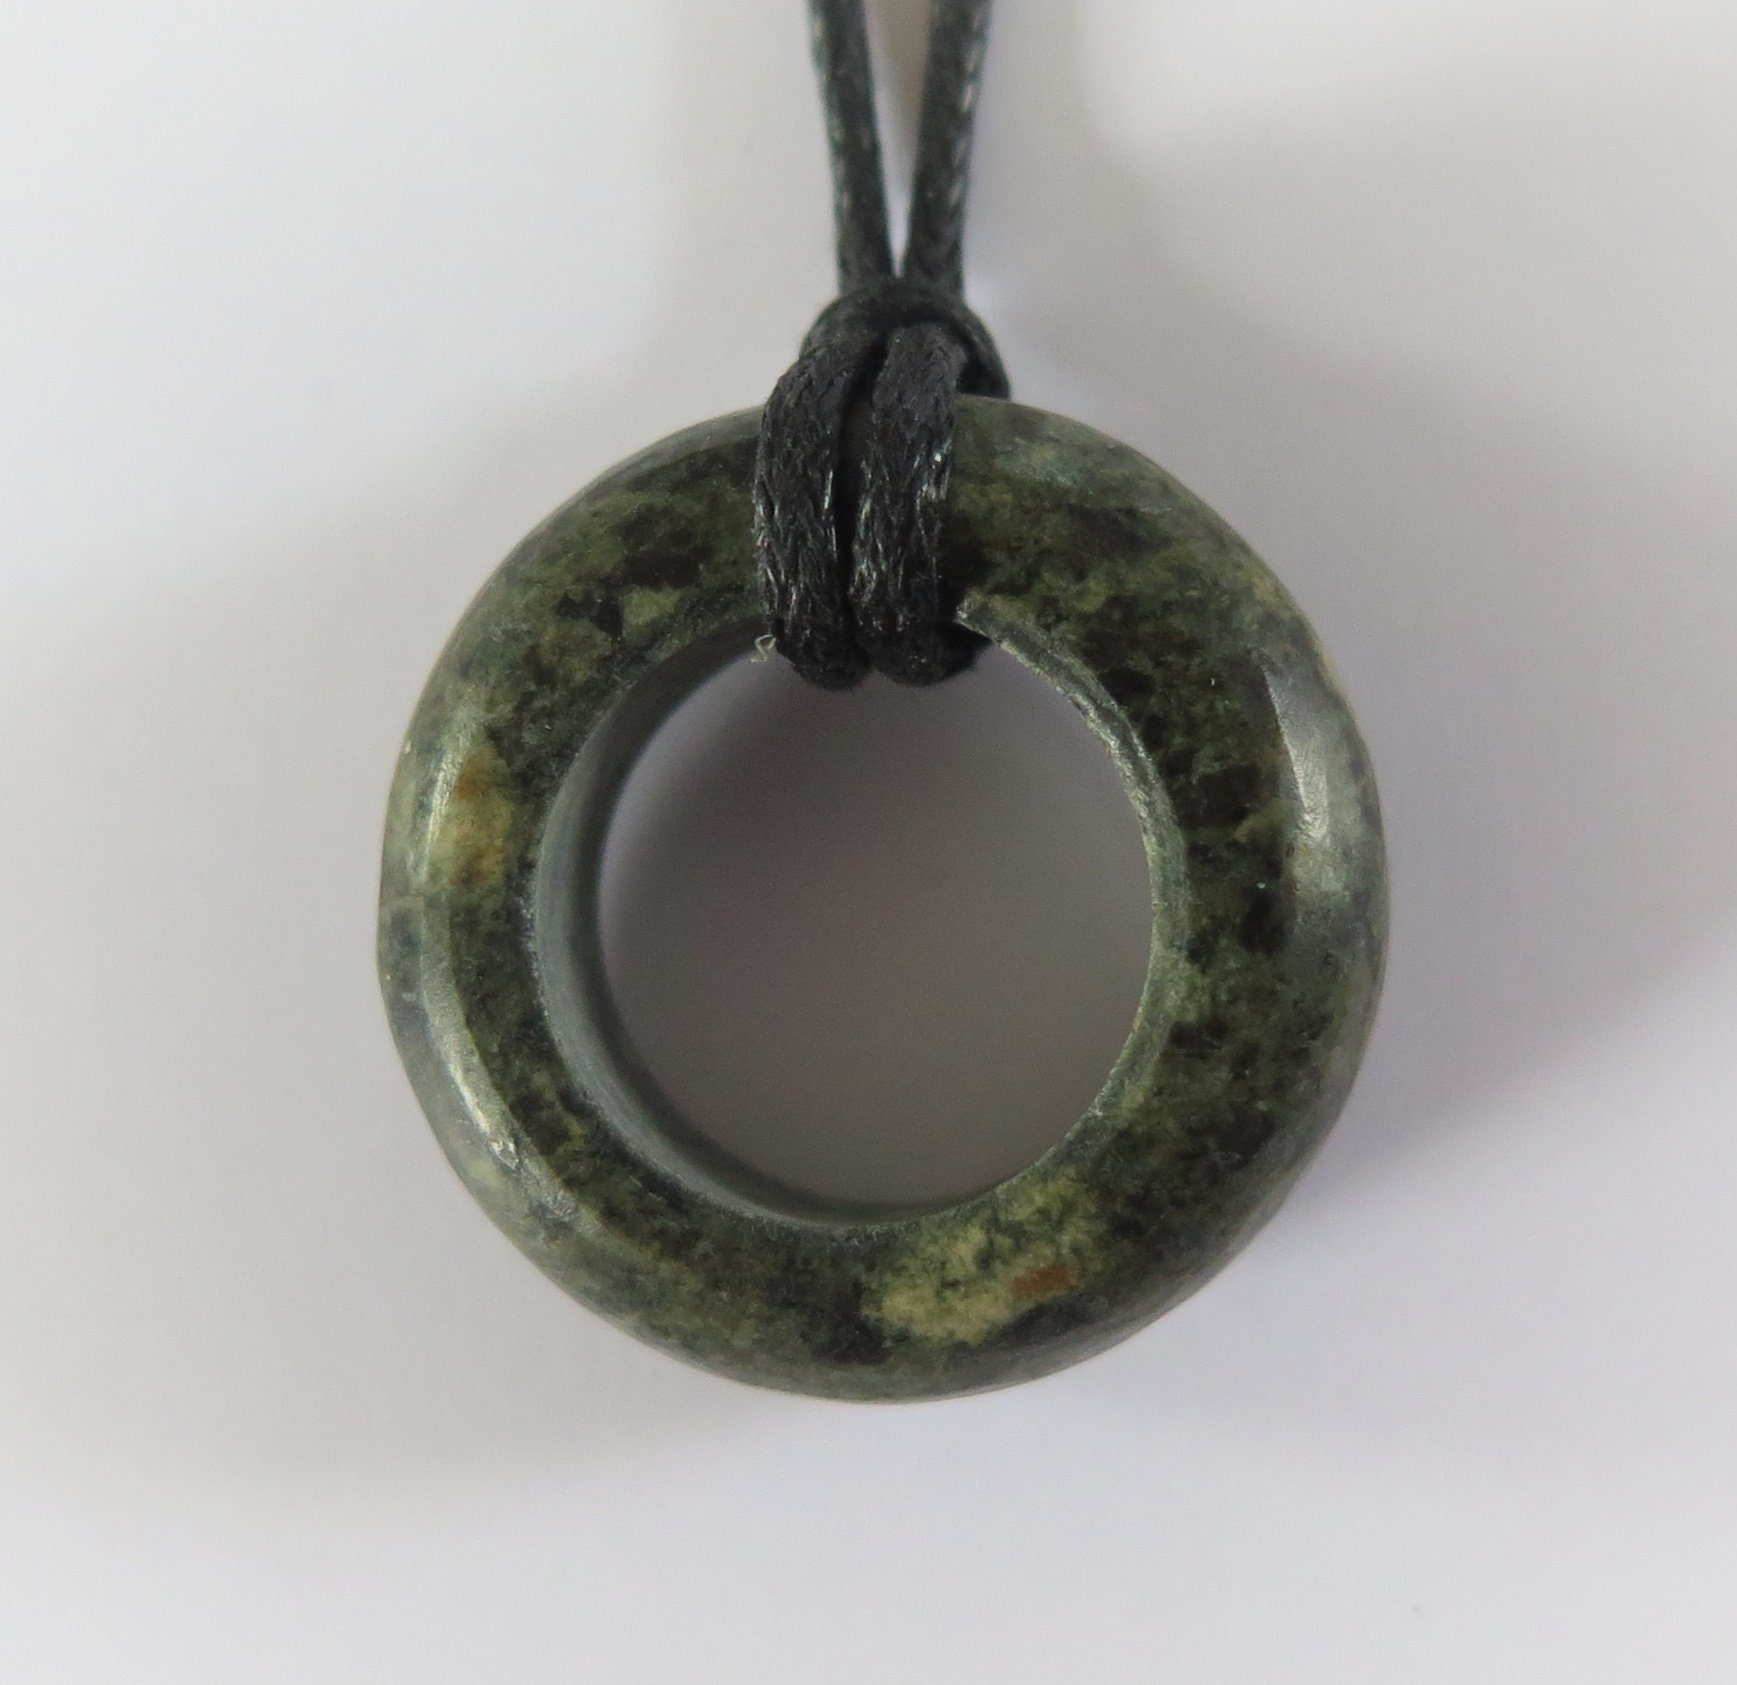 Preseli Bluestone pendant with 925 silver Stonehenge stone handmade in Wales Celtic gift